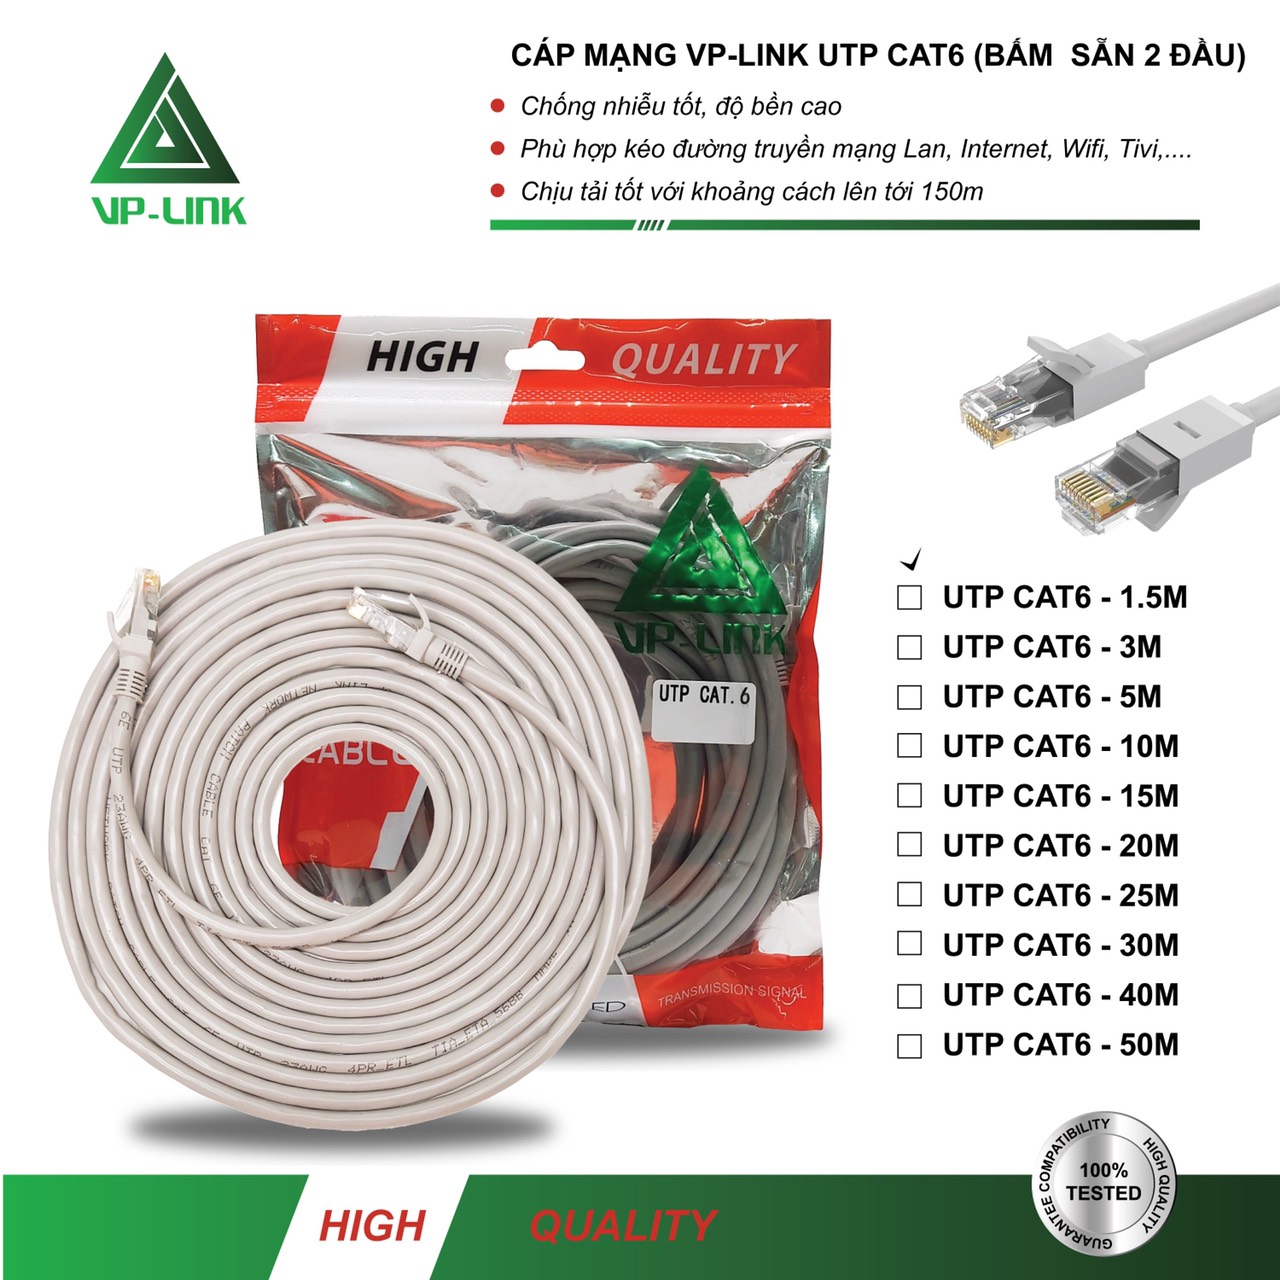 Cable LAN VP-LINK UTP CAT6 15m Bấm sẵn 2 đầu